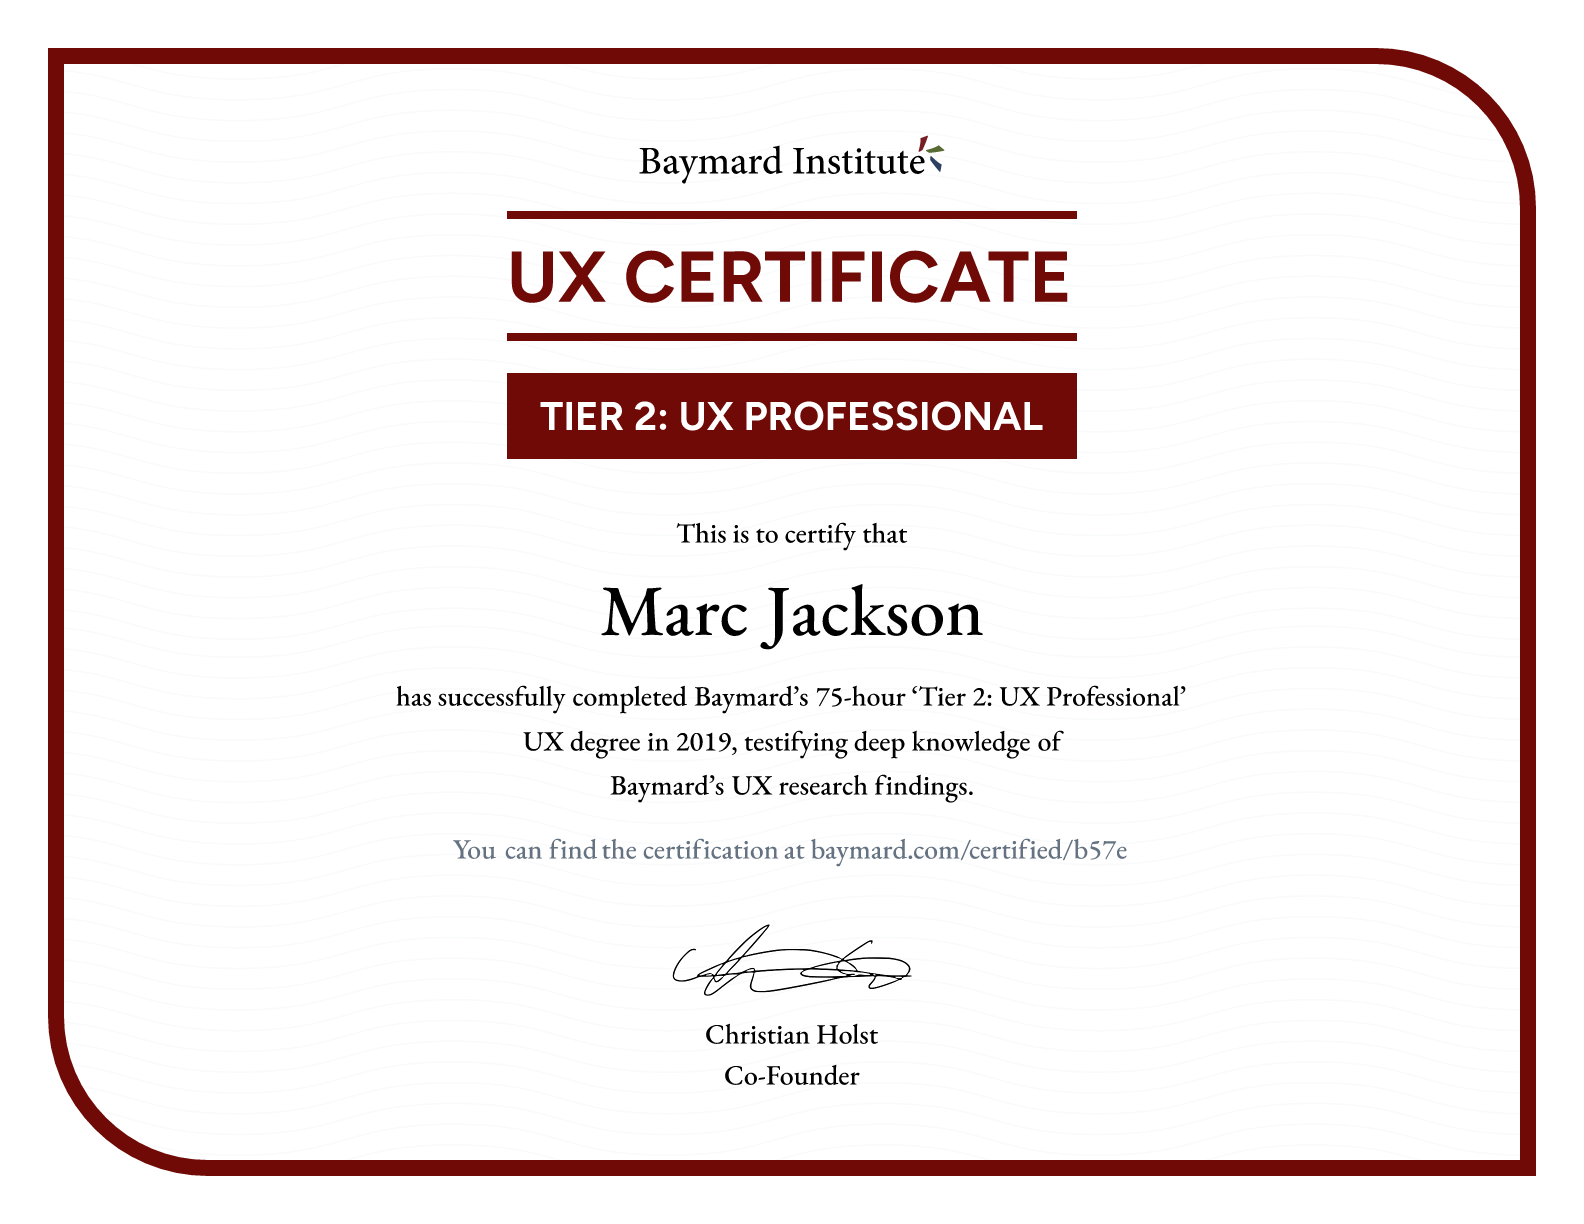 Marc Jackson’s certificate